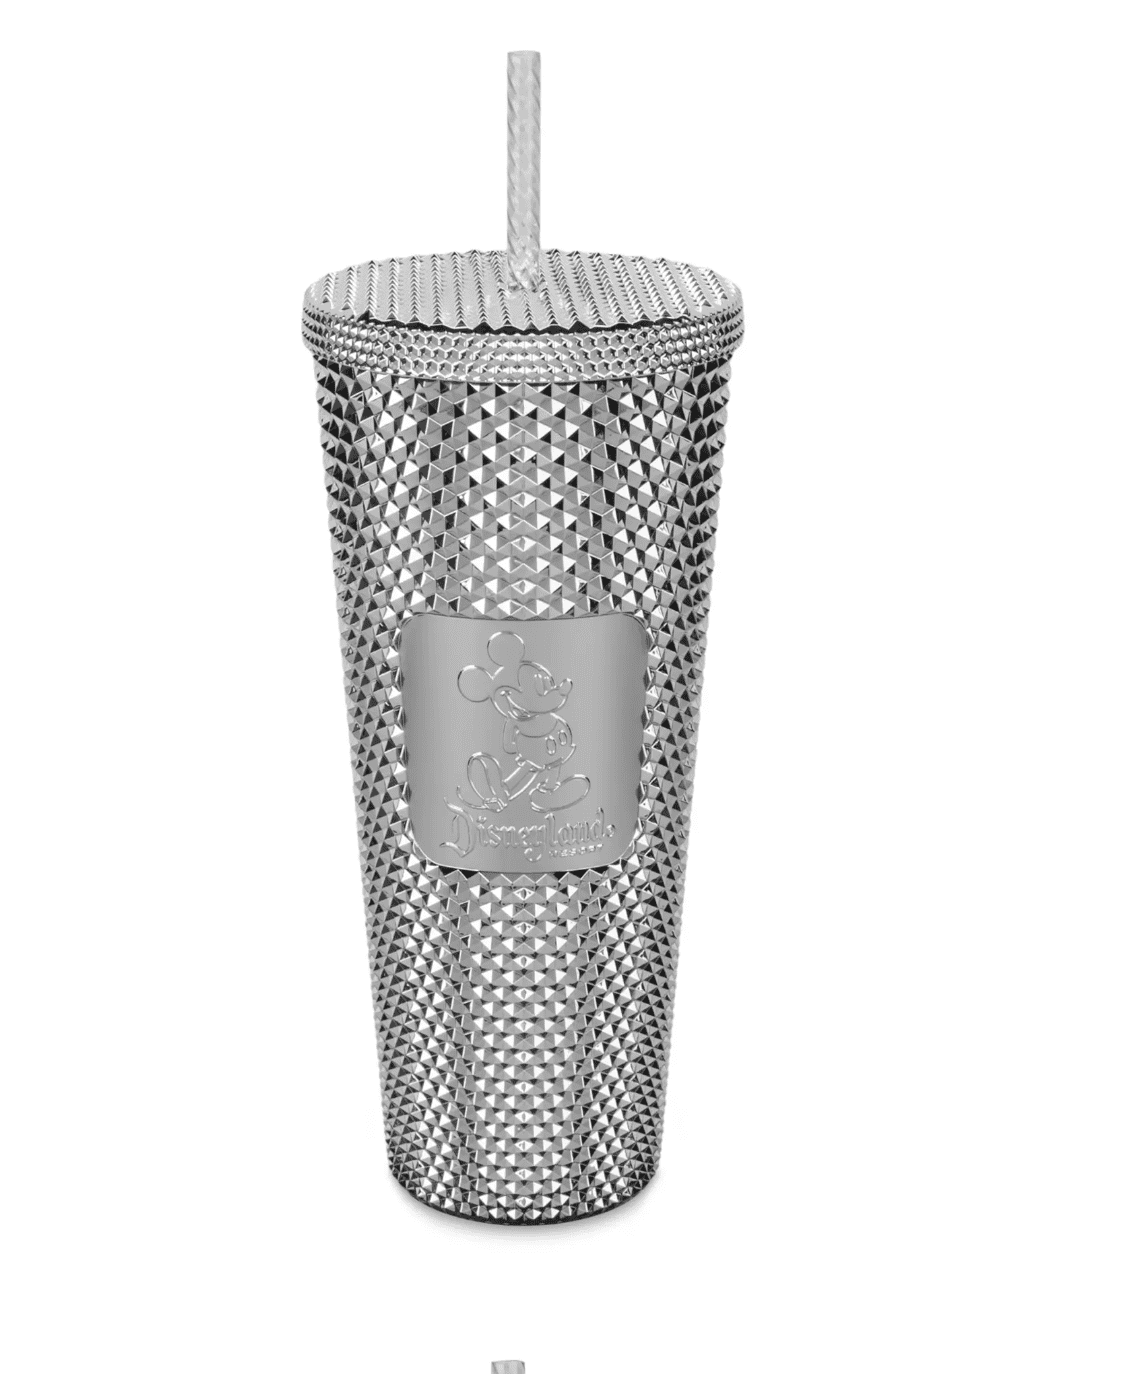 1pc New Stainless Steel 20oz Disney Princess Starbucks Tumbler Skinny Cup